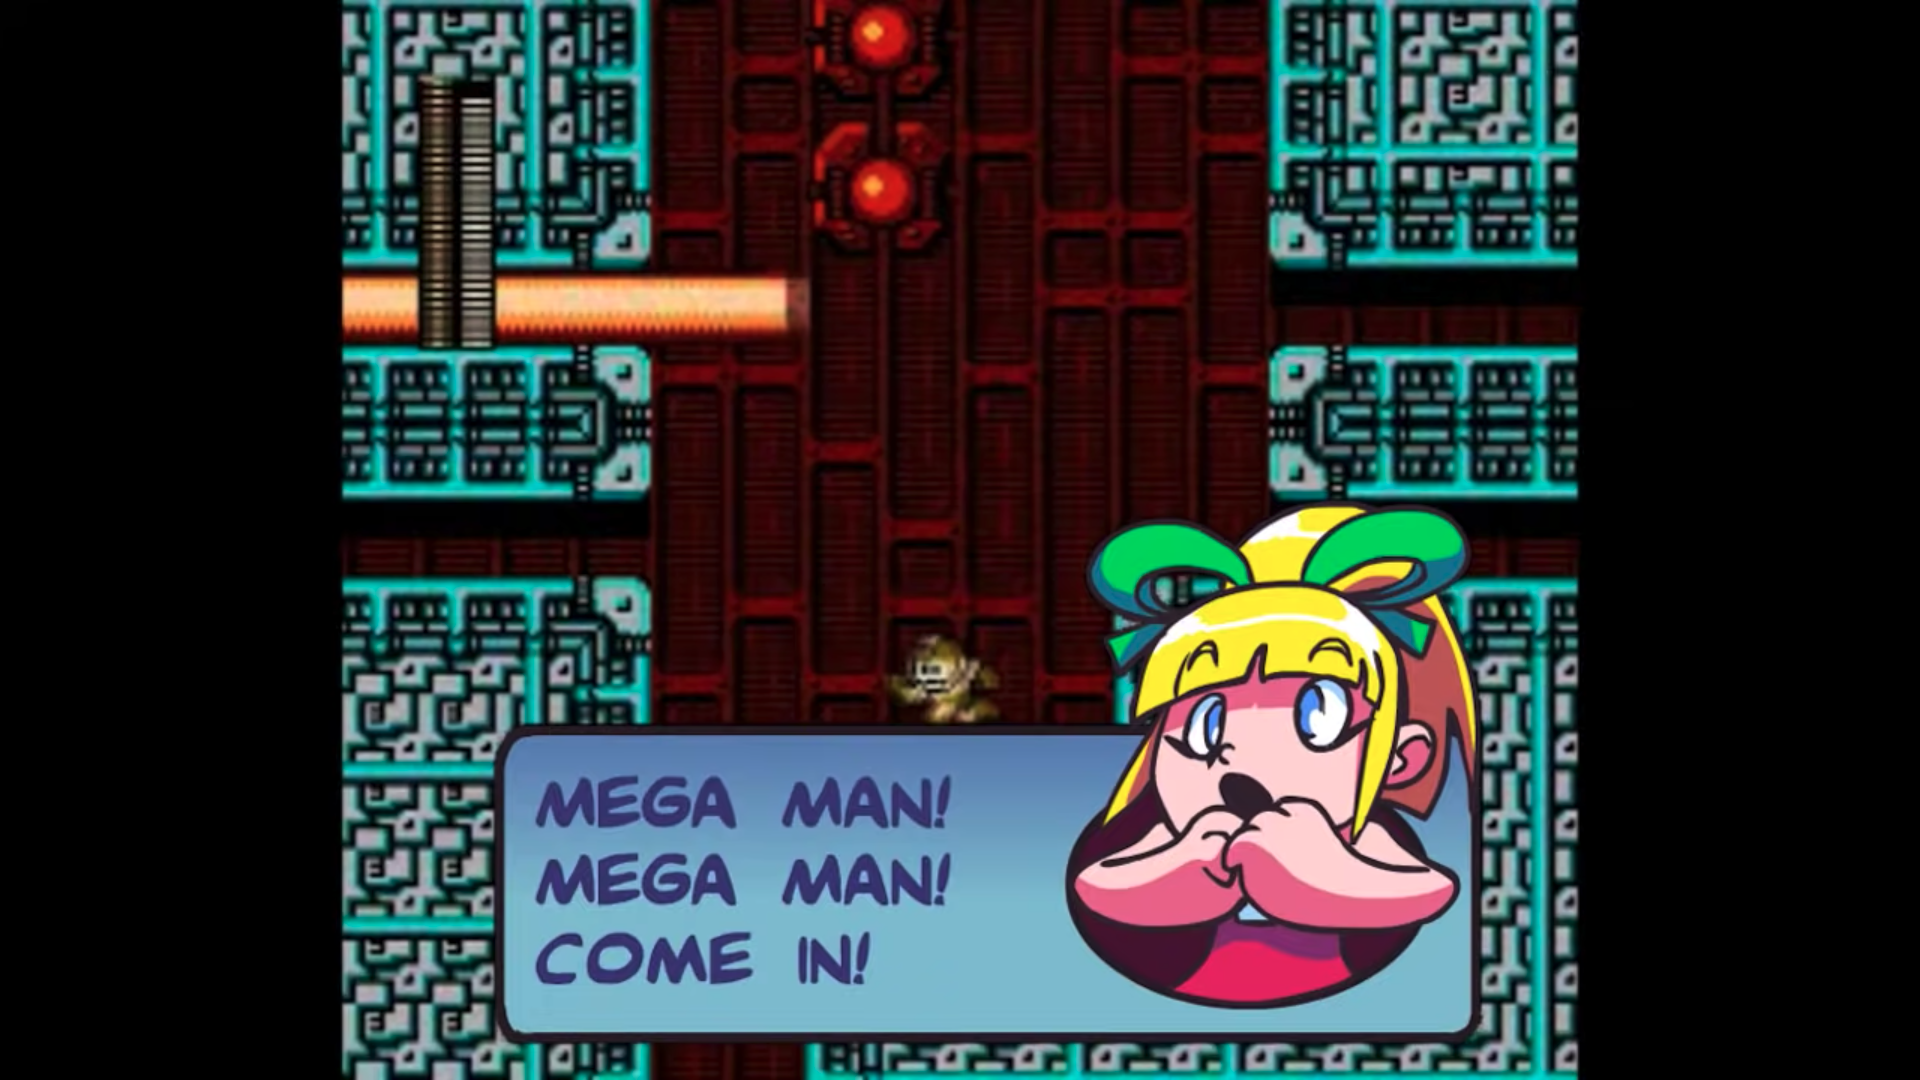 Mega Man! Mega Man!